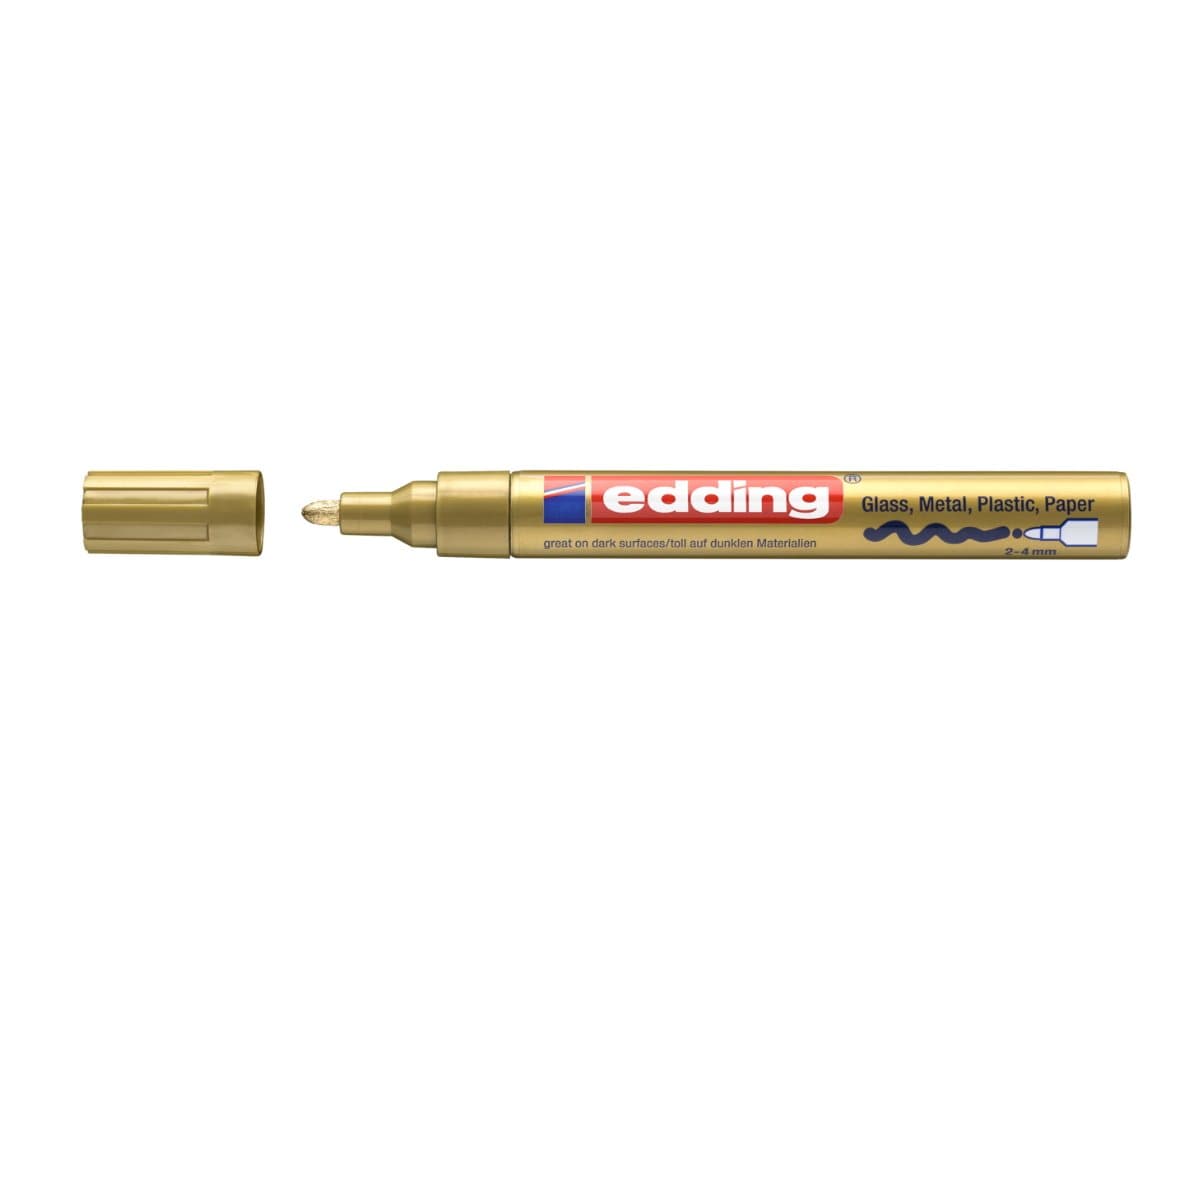 Edding® 750 marqueur or-ed750-gd